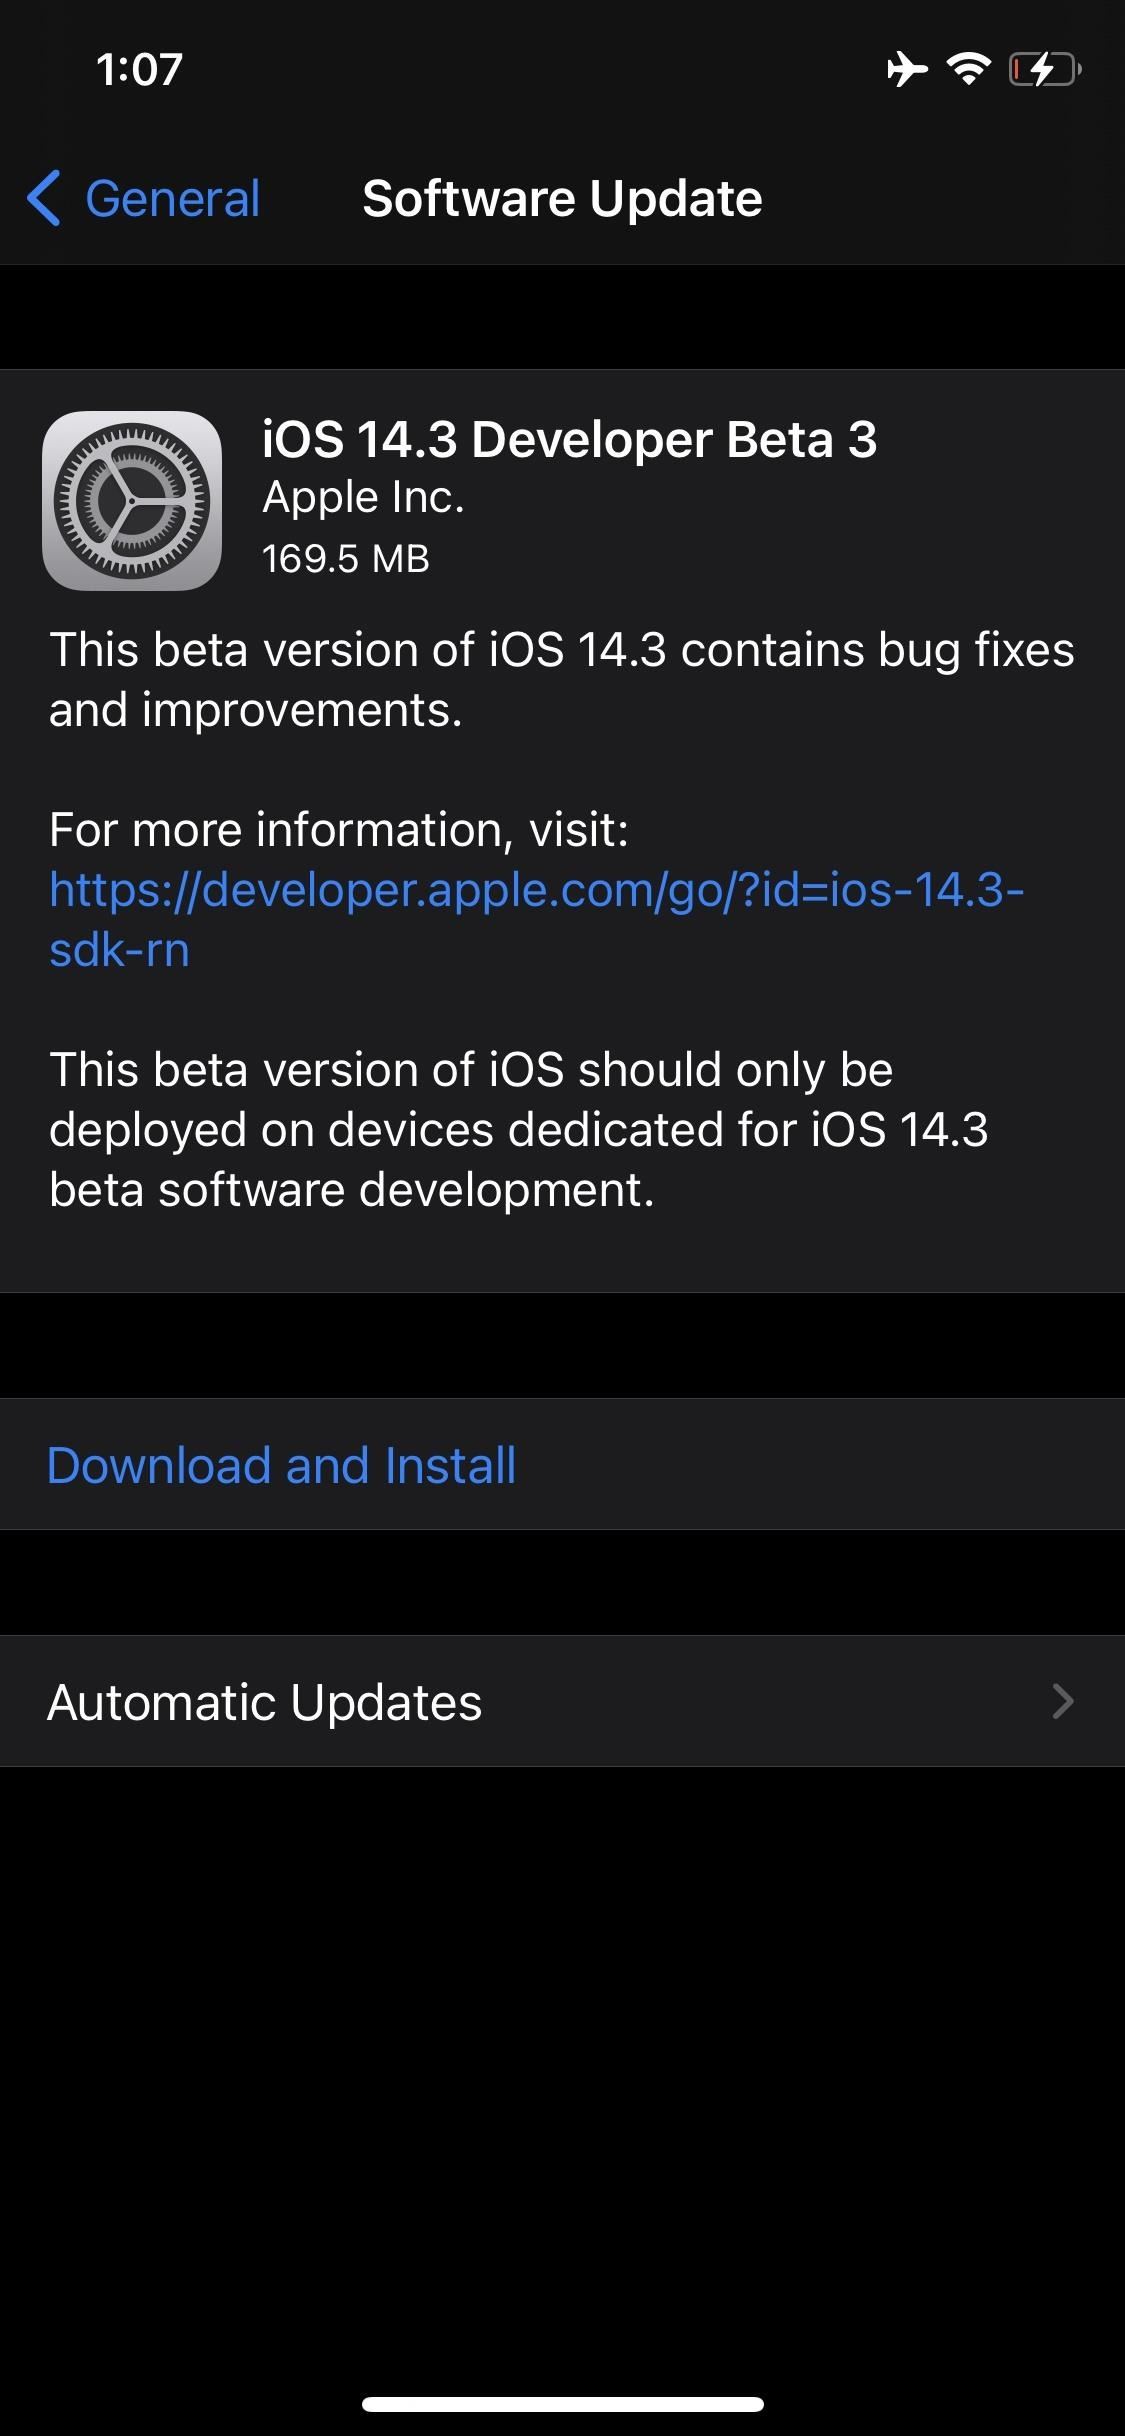 Apple Releases iOS 14.3 Developer Beta 3 for iPhone